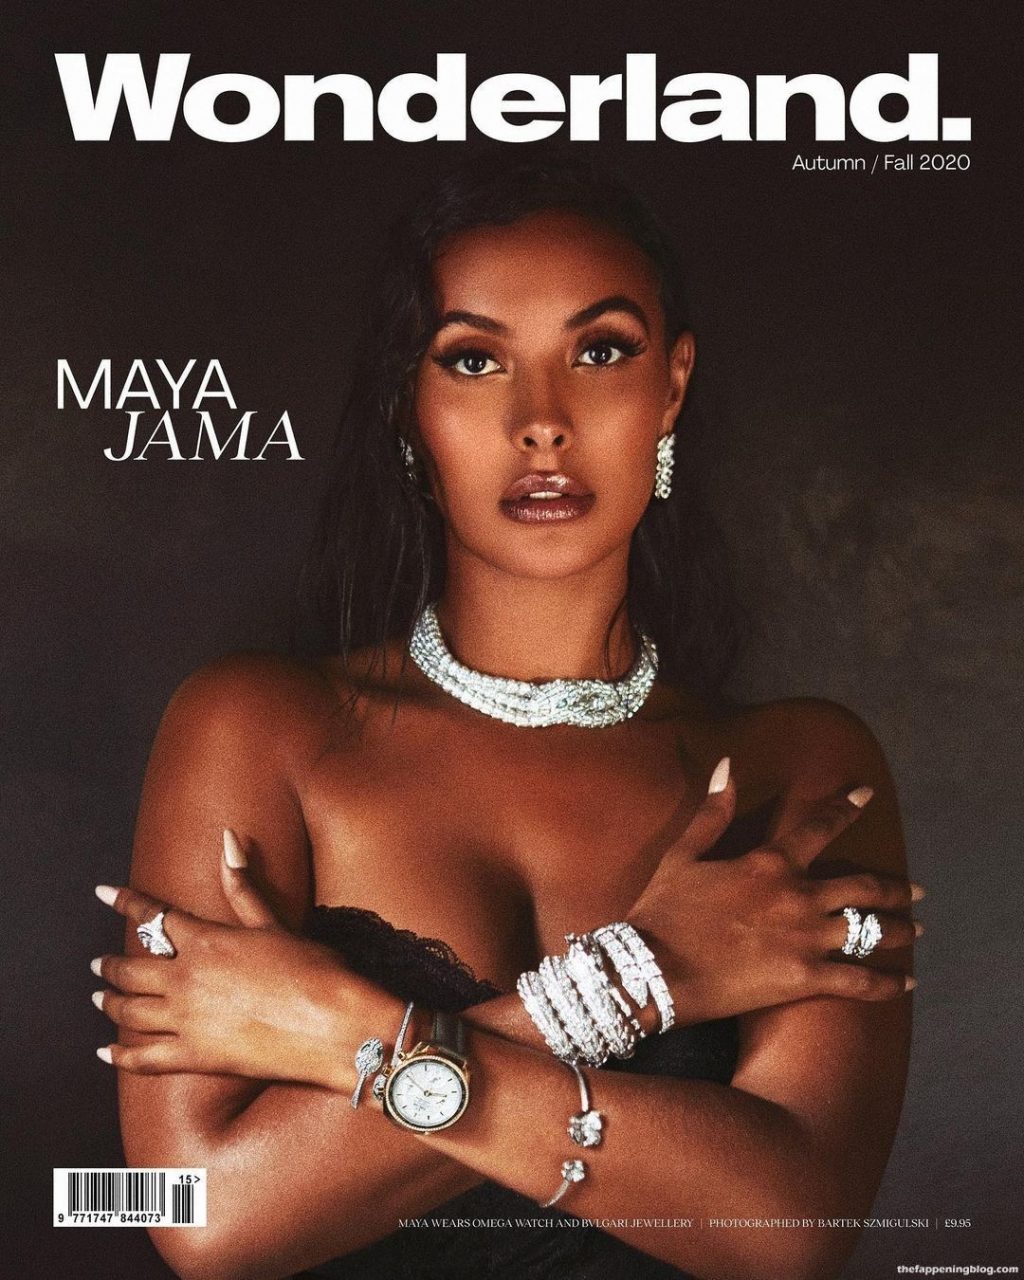 Maya jama topless